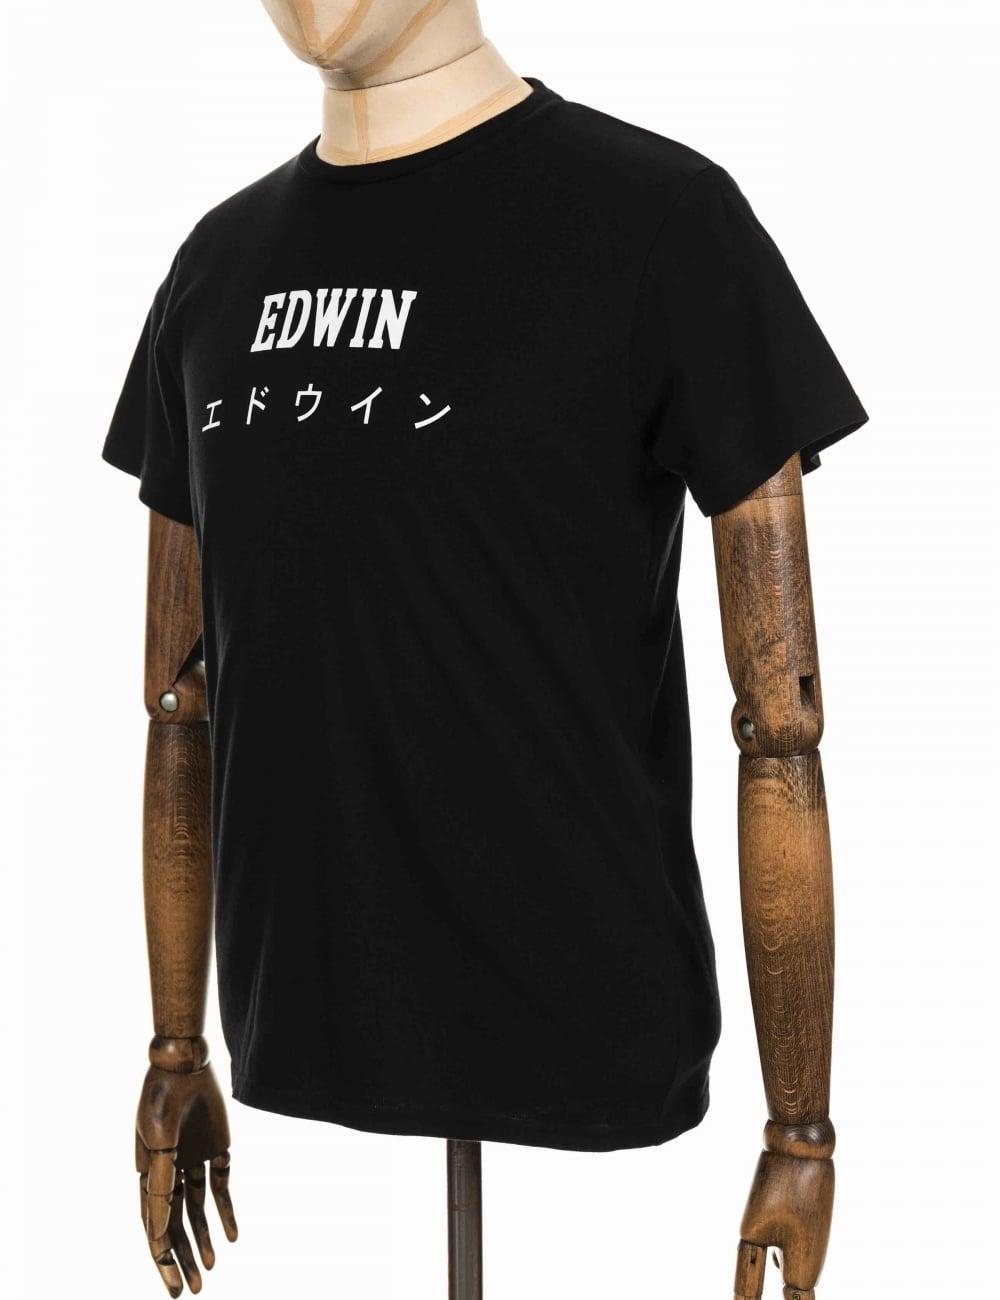 Edwin Logo - Edwin Jeans Japan Logo Tee from Fat Buddha Store UK